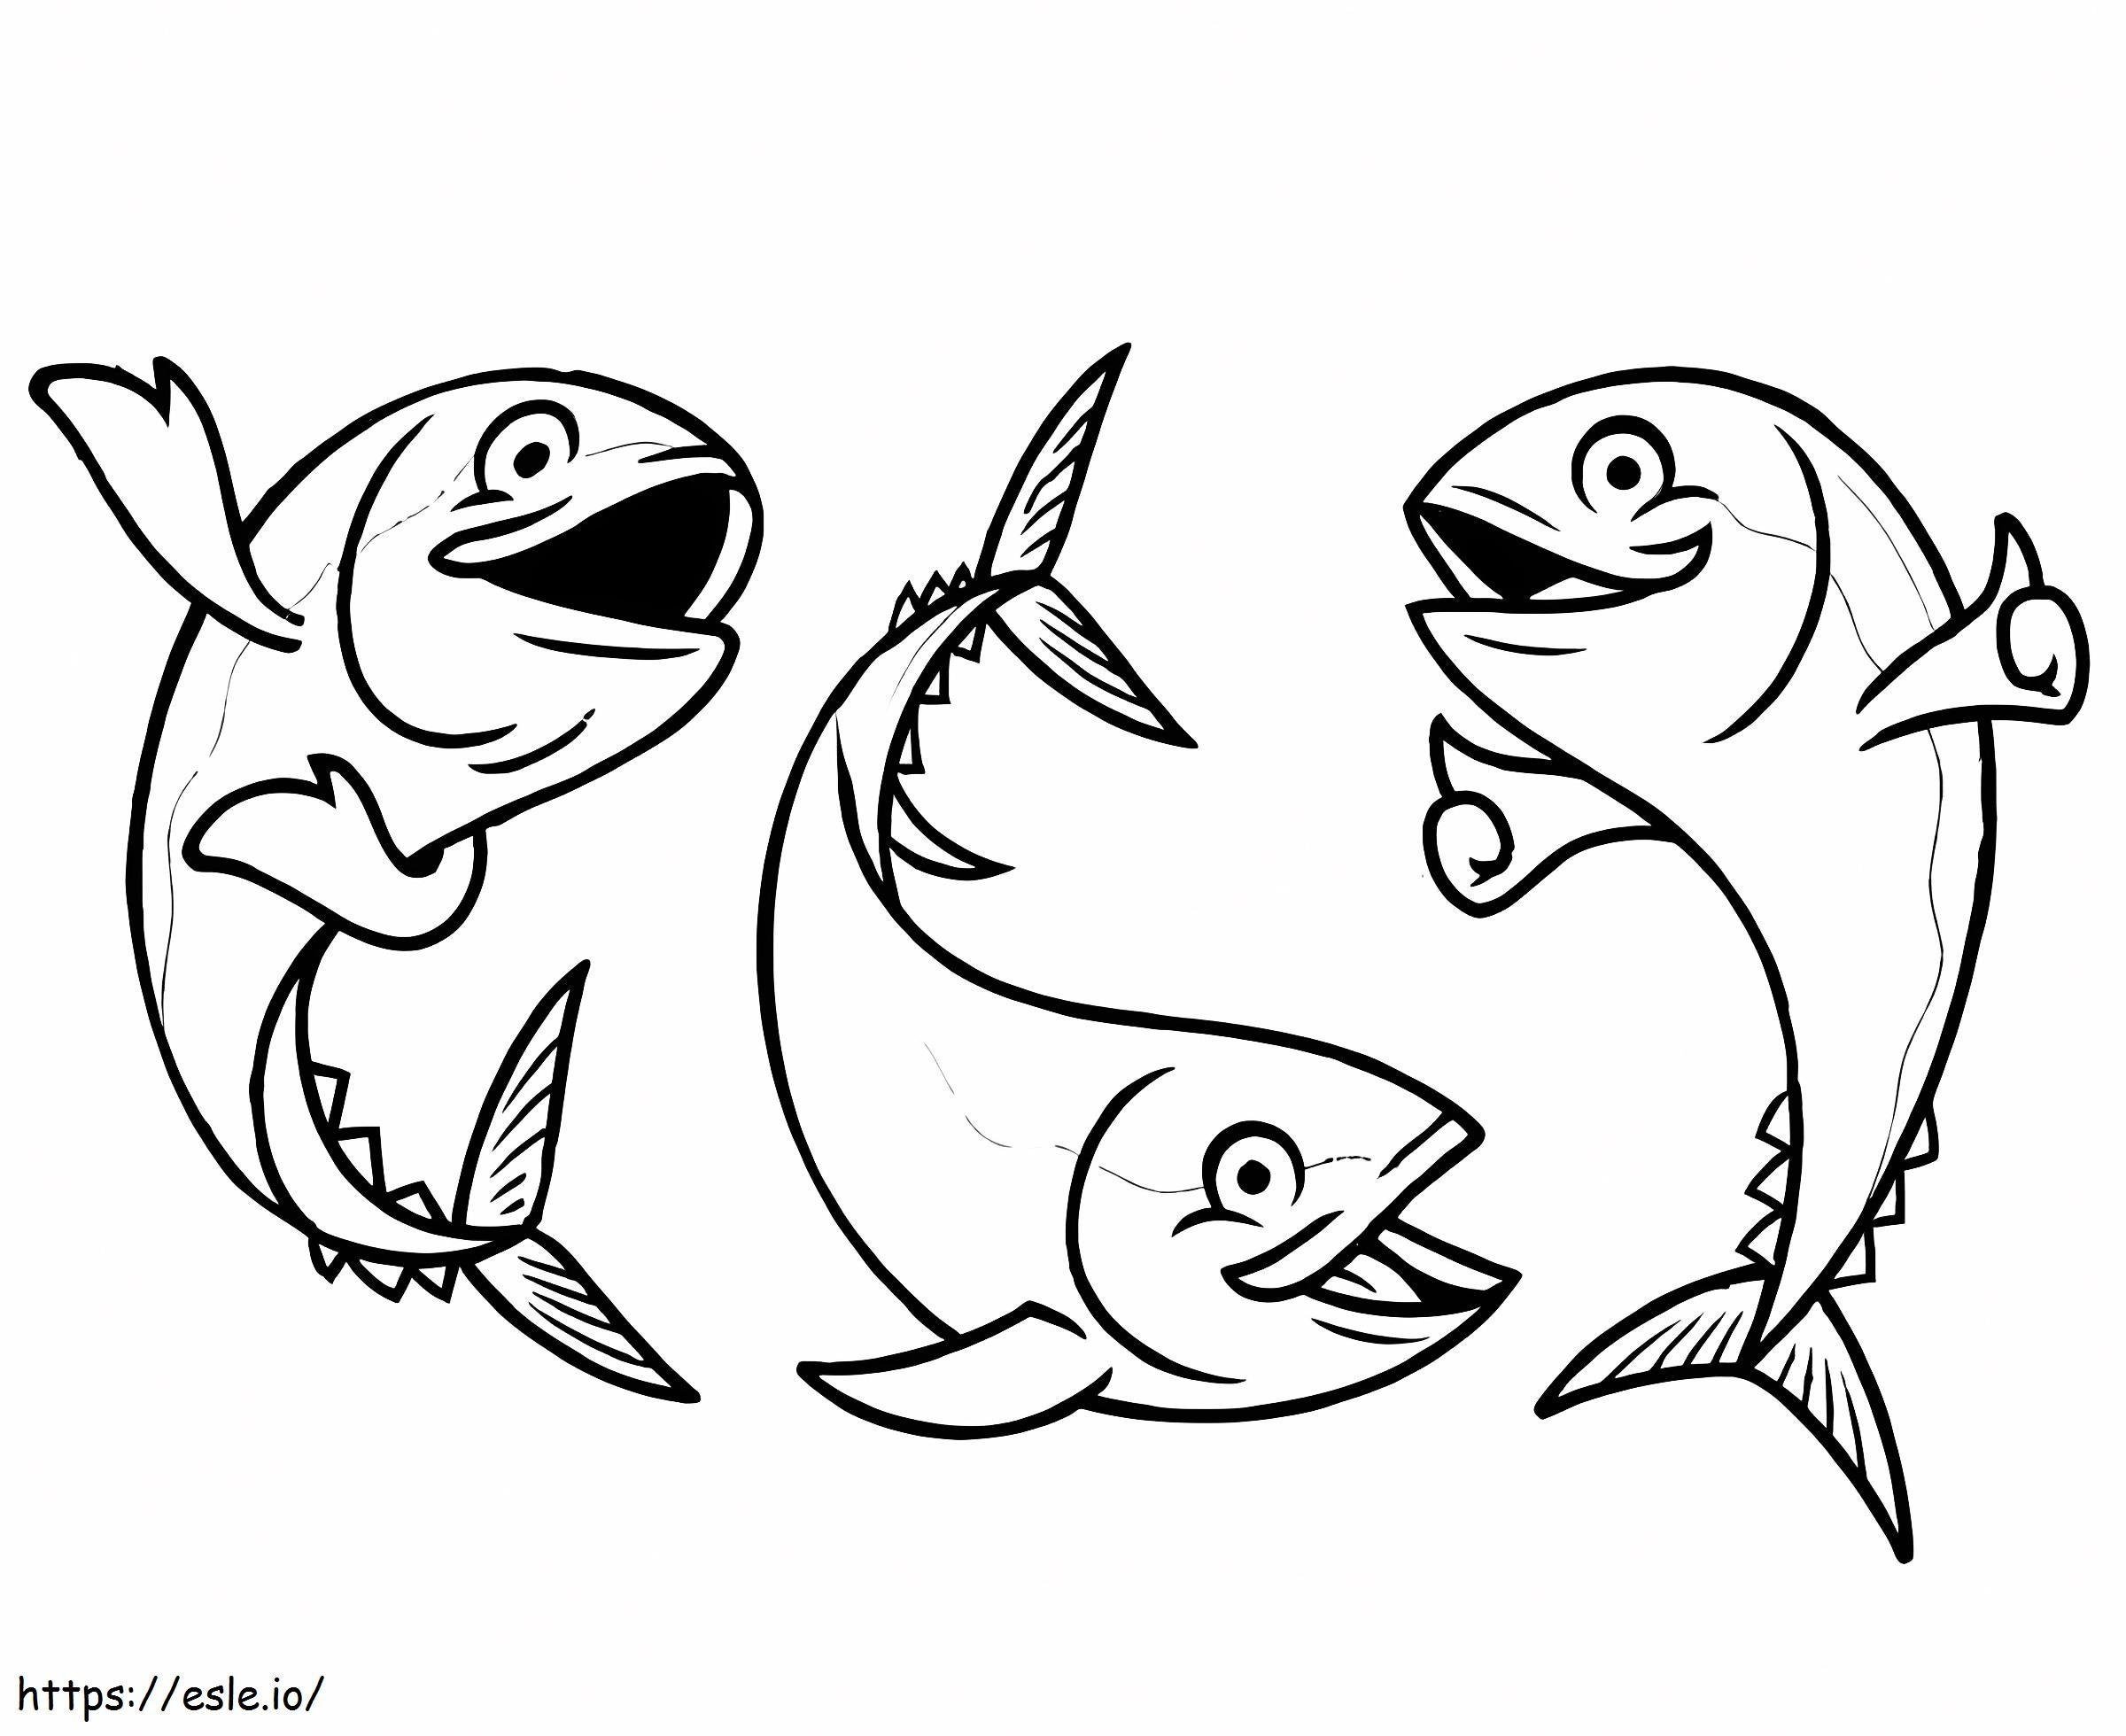 Three Tuna coloring page